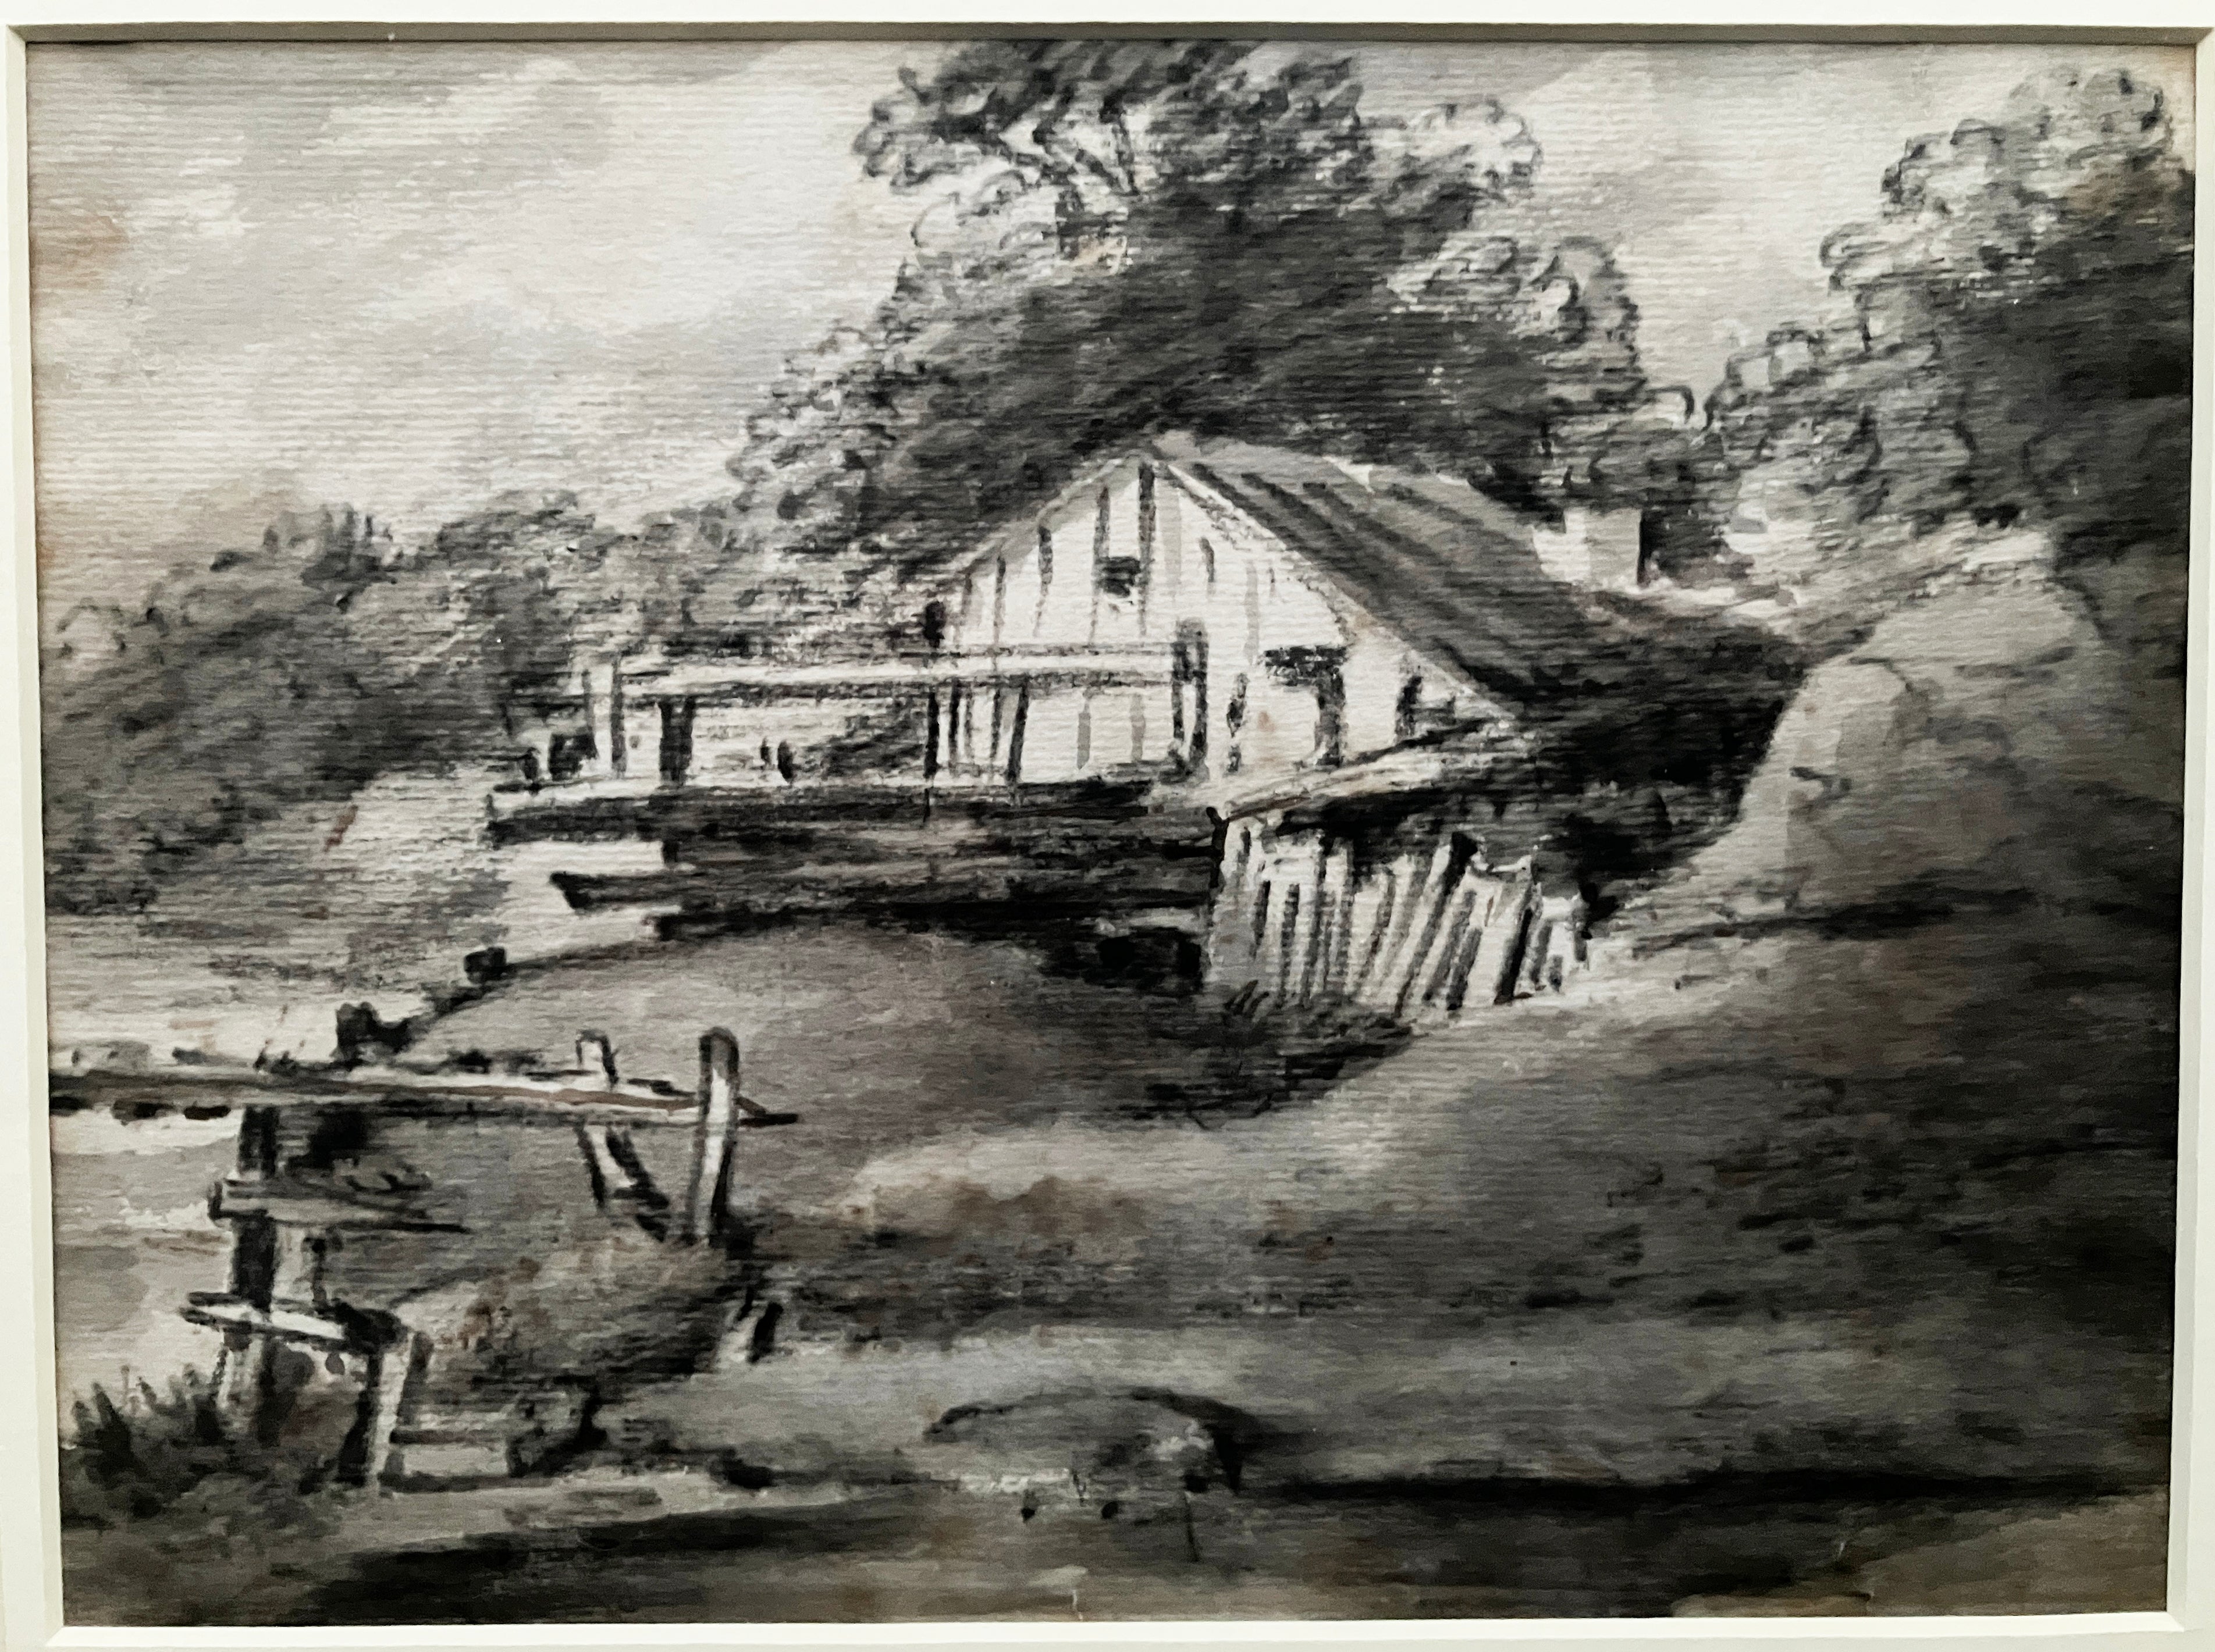 Dr Thomas Monro (c.1790s). Black chalk, wash and brush – wood shack by river